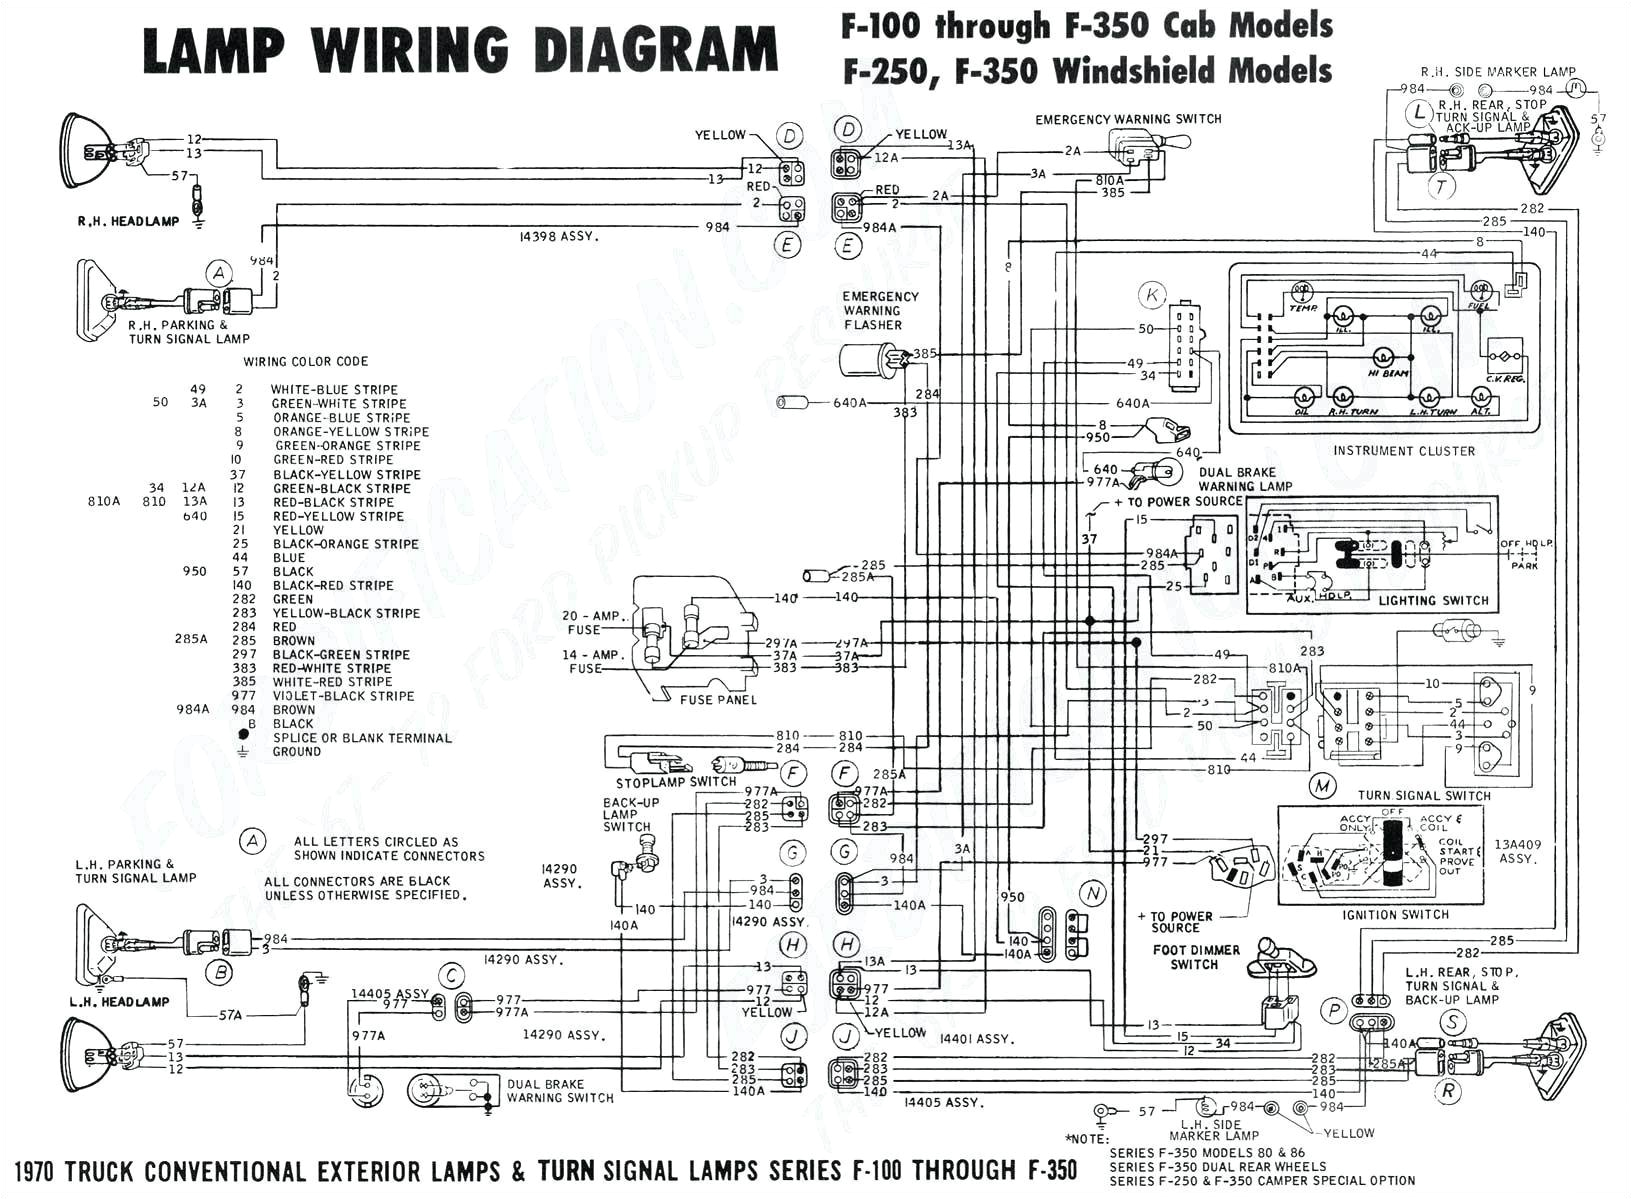 diamante engine diagram trusted wiring diagrams u2022 rh inspiralni co 97 eclipse wiring diagram 97